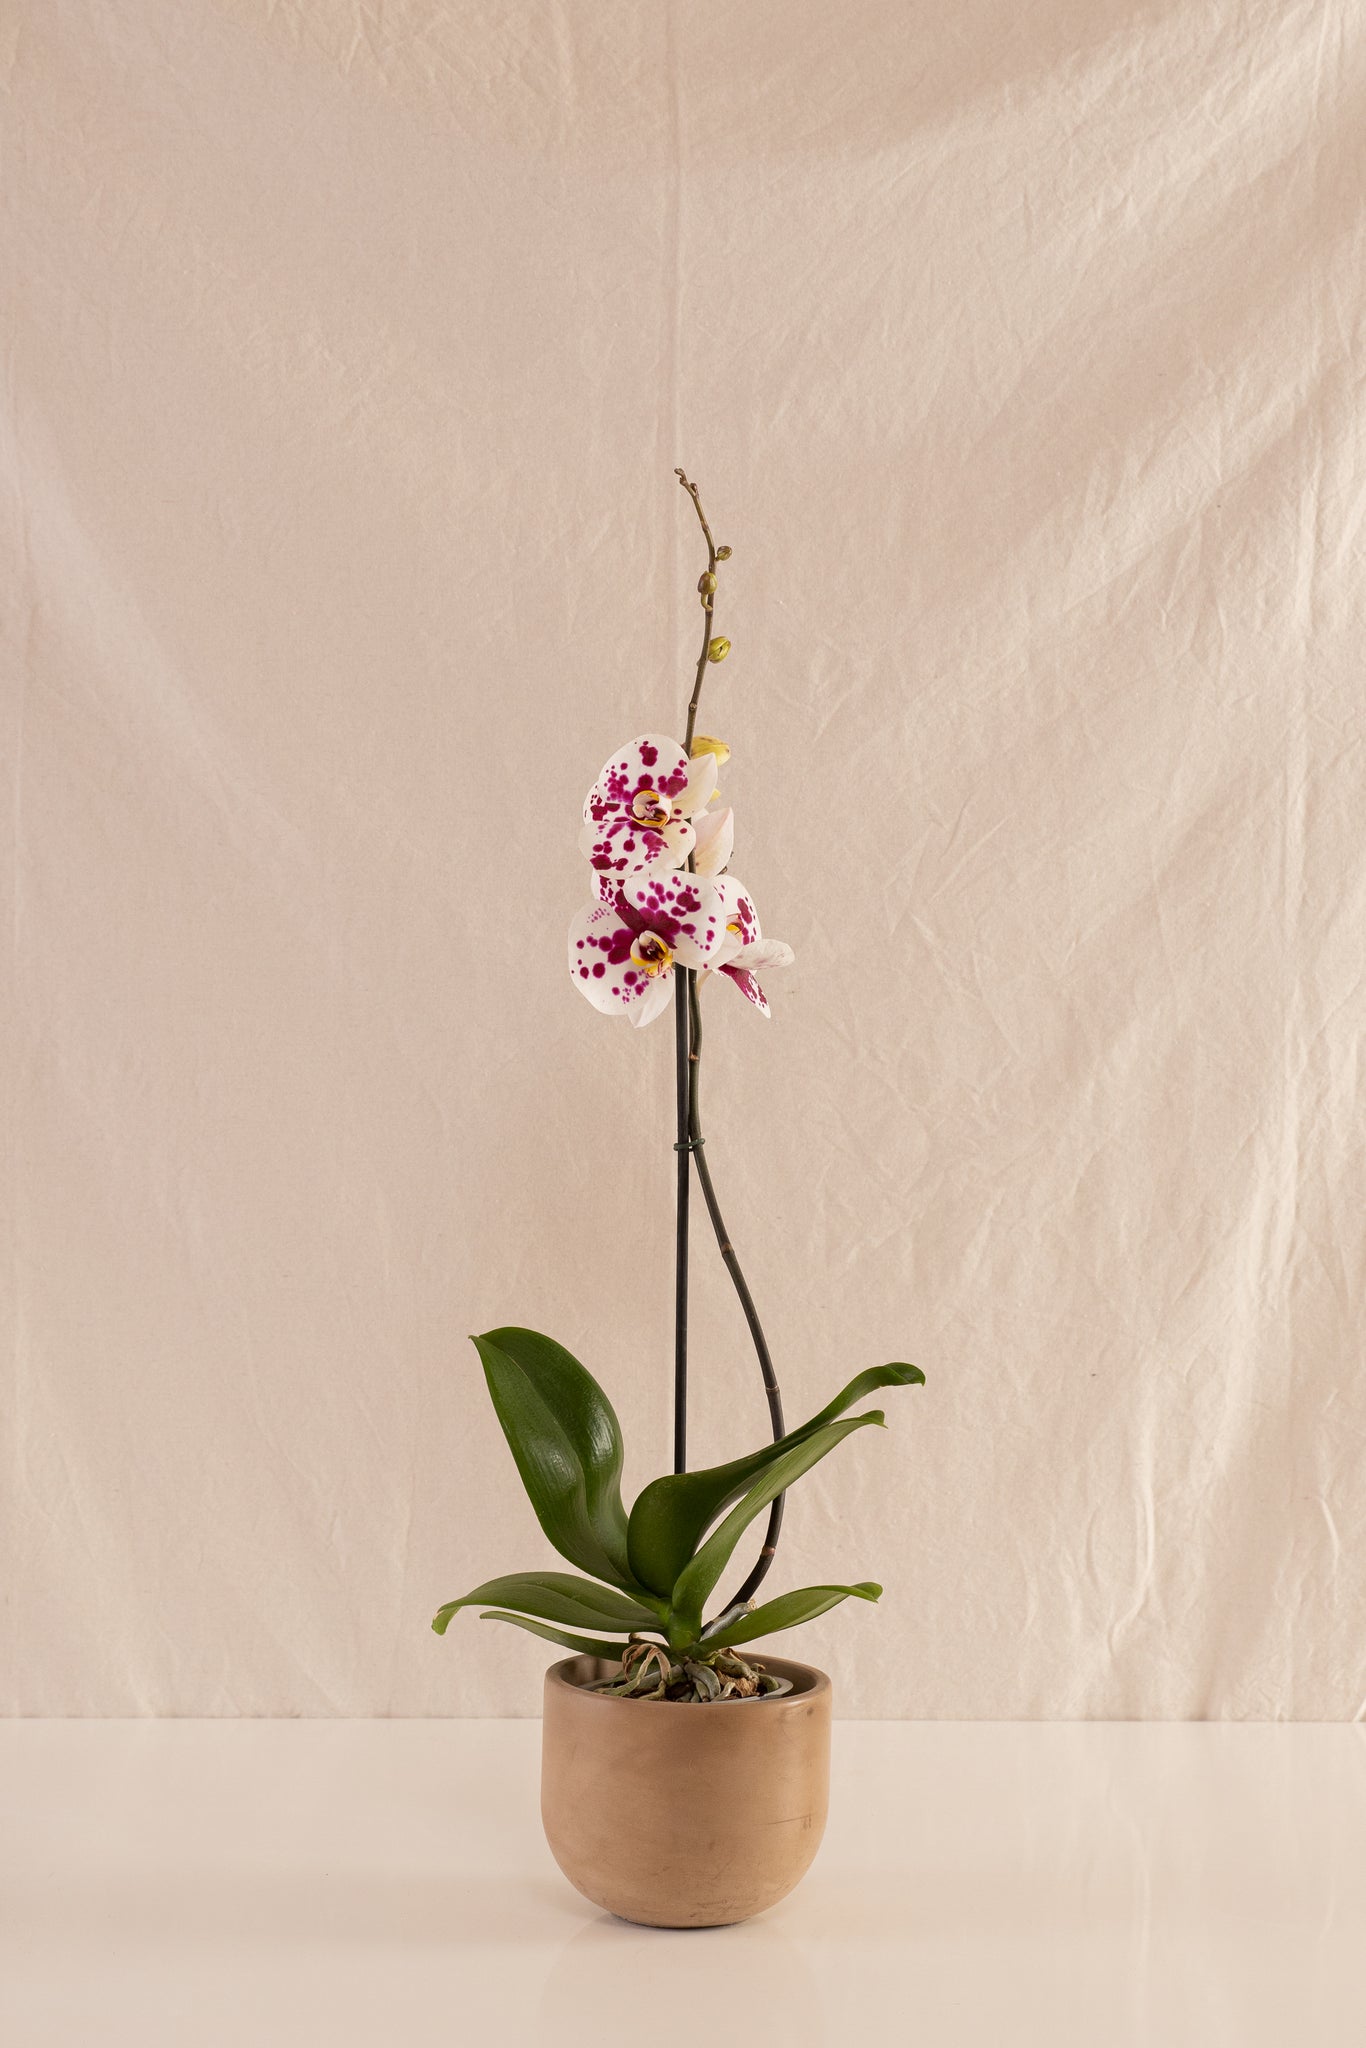 Orquídea Phalaenopsis de 1 Tallo Bicolor Blanca con Puntos Fucsia